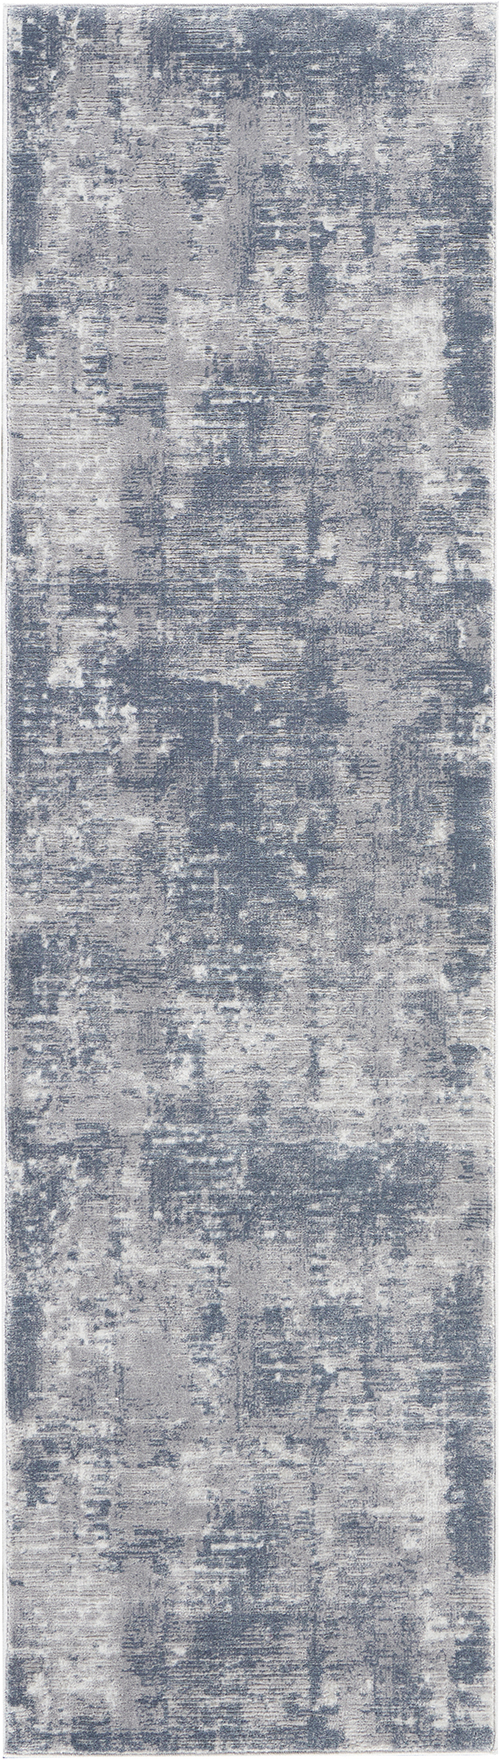 Nourison Rugs - Rustic Textures Runner RUS05 Rug in Grey - 2.3m x 0.66m